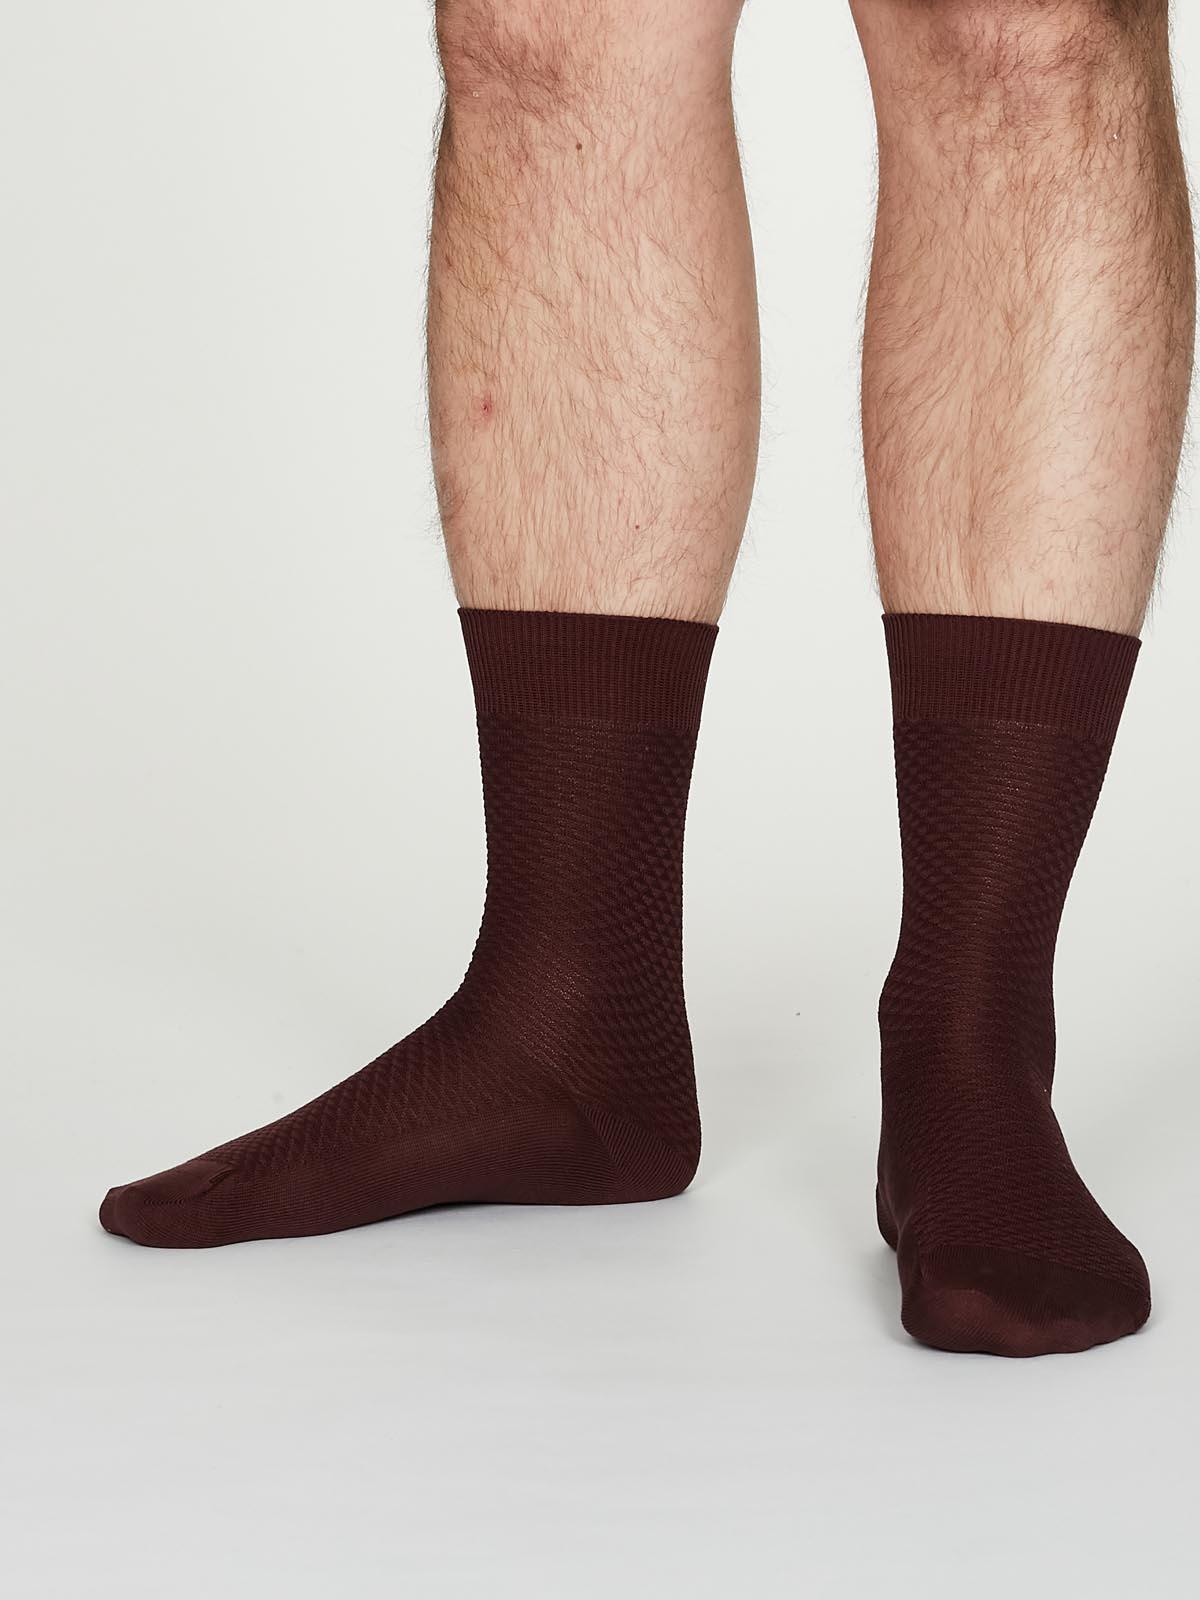 Geoffrey Organic Cotton Suit Socks - Burgundy - Thought Clothing UK